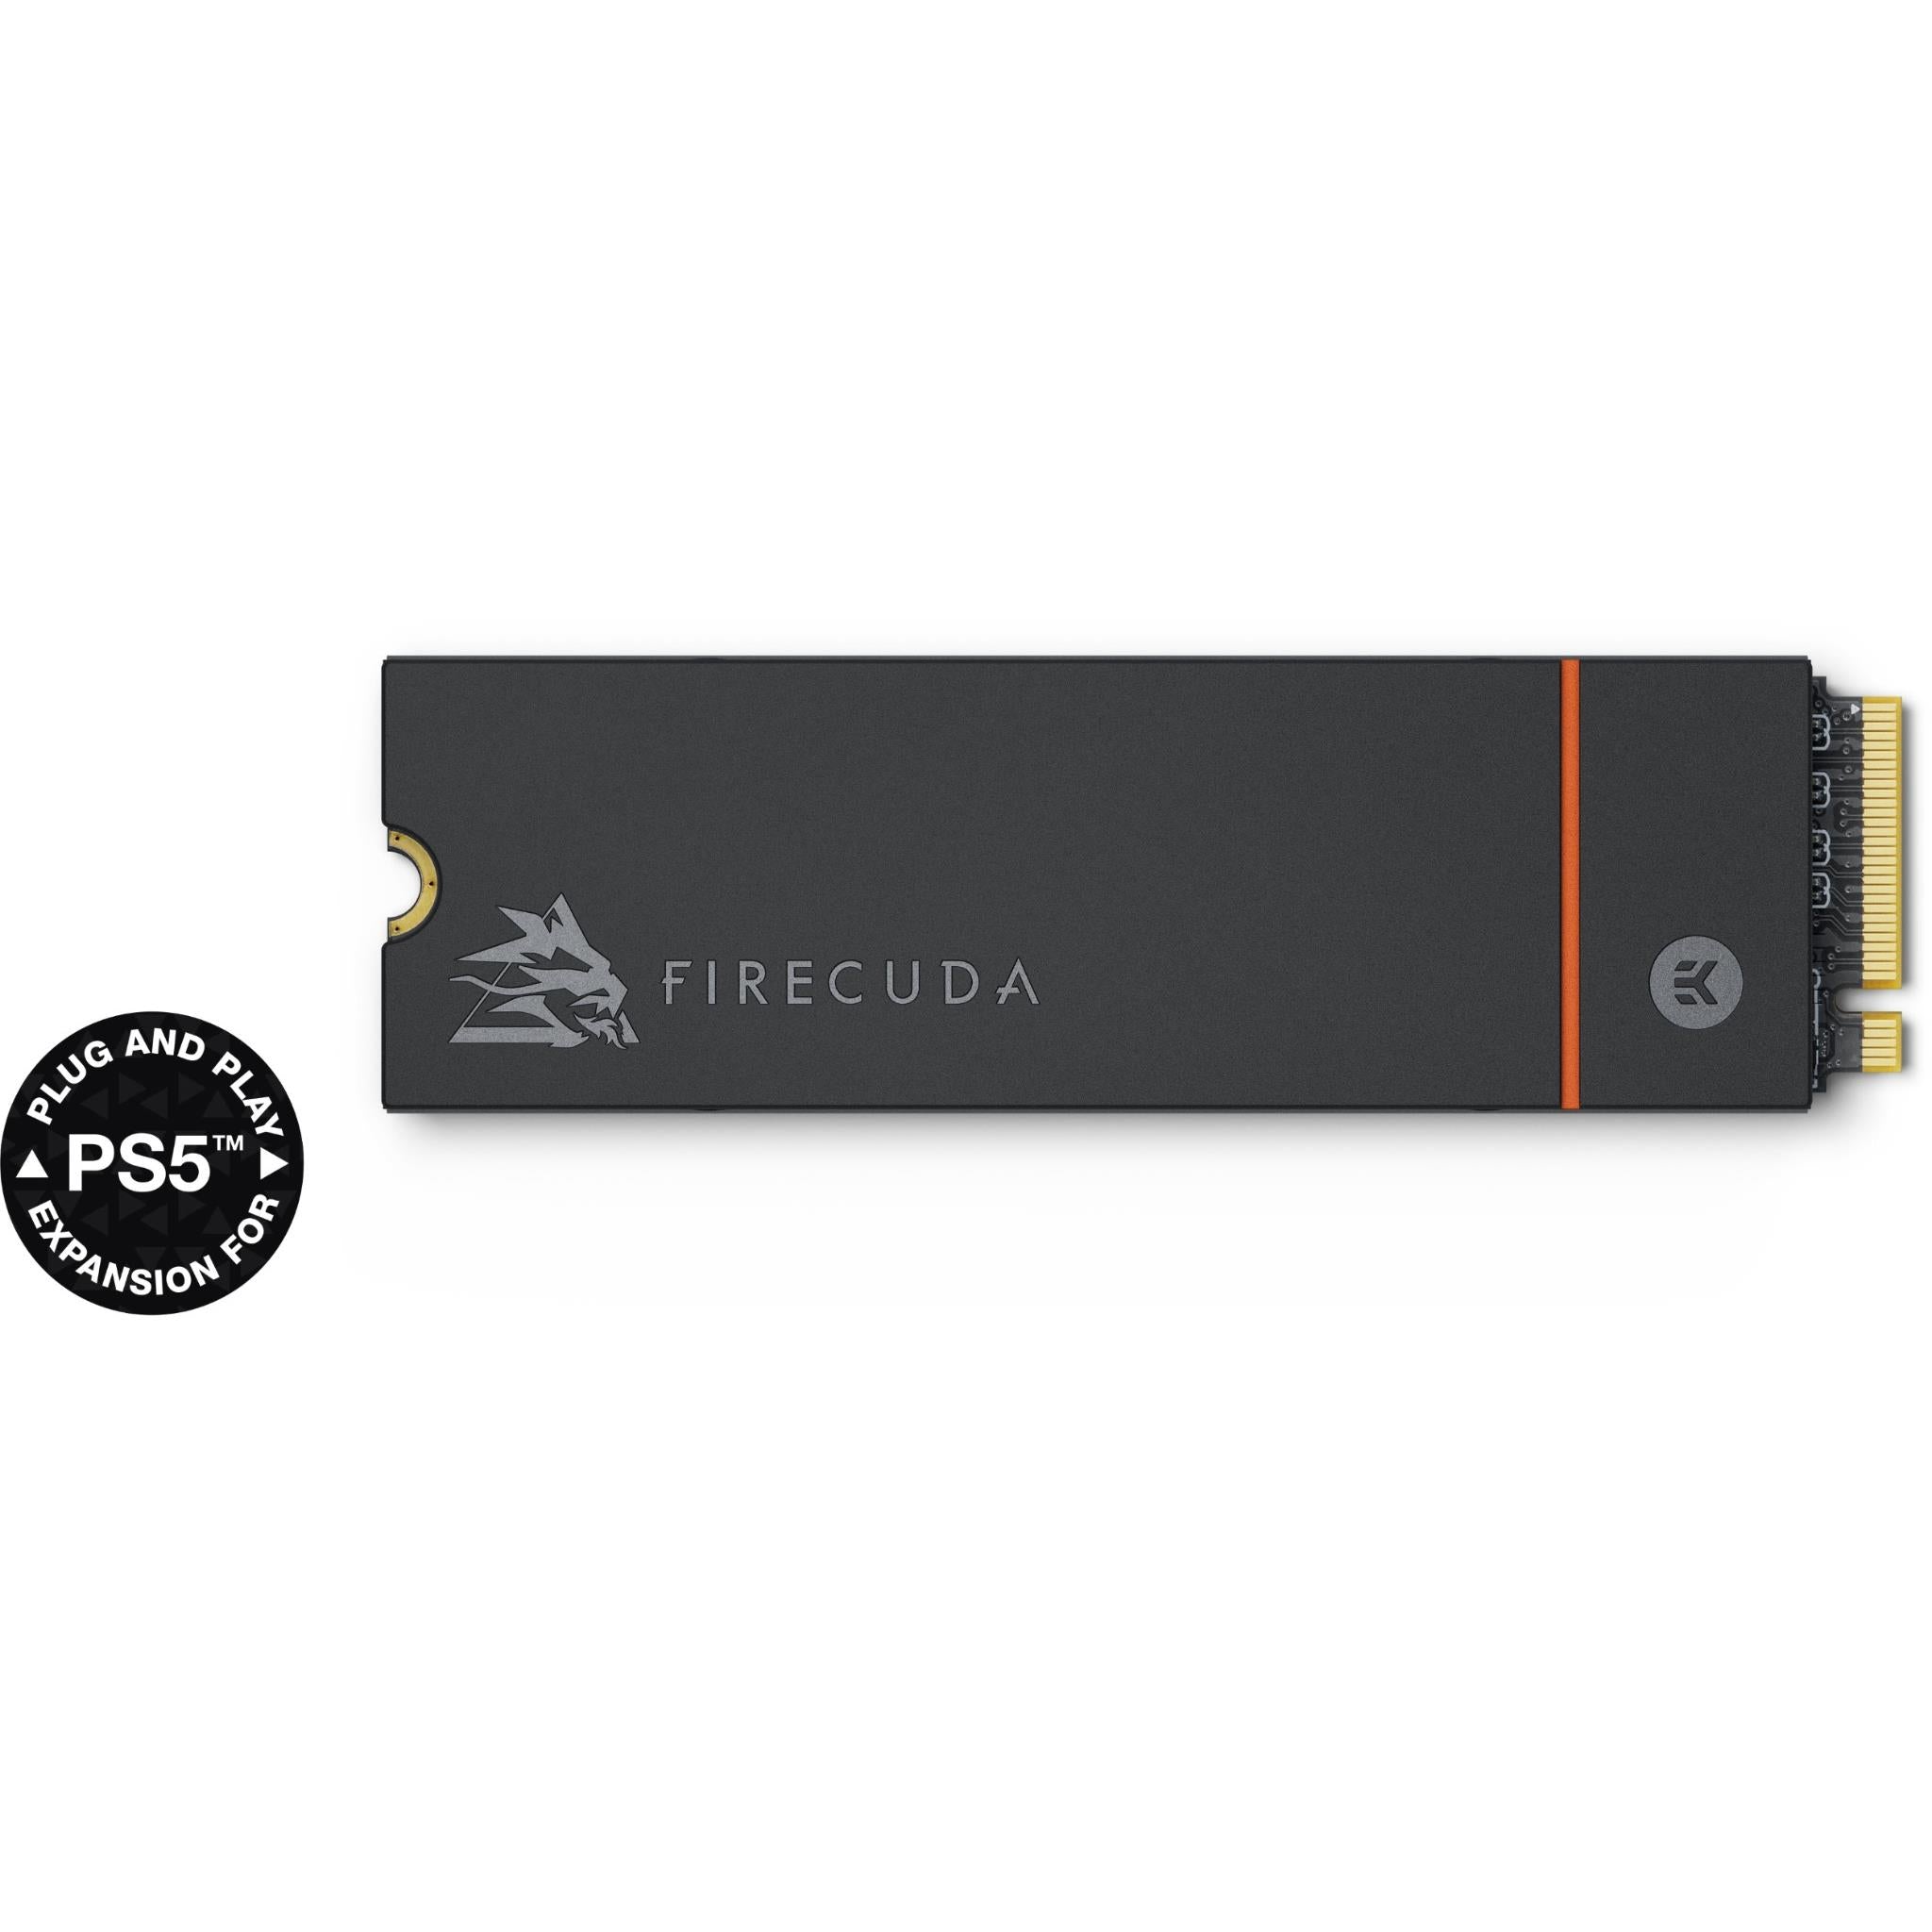  Seagate FireCuda 530 4TB M.2 PCIe Gen4 NVMe SSD - 7300MB/s,  5100 TBW, Heatsink, Rescue Services : Electronics